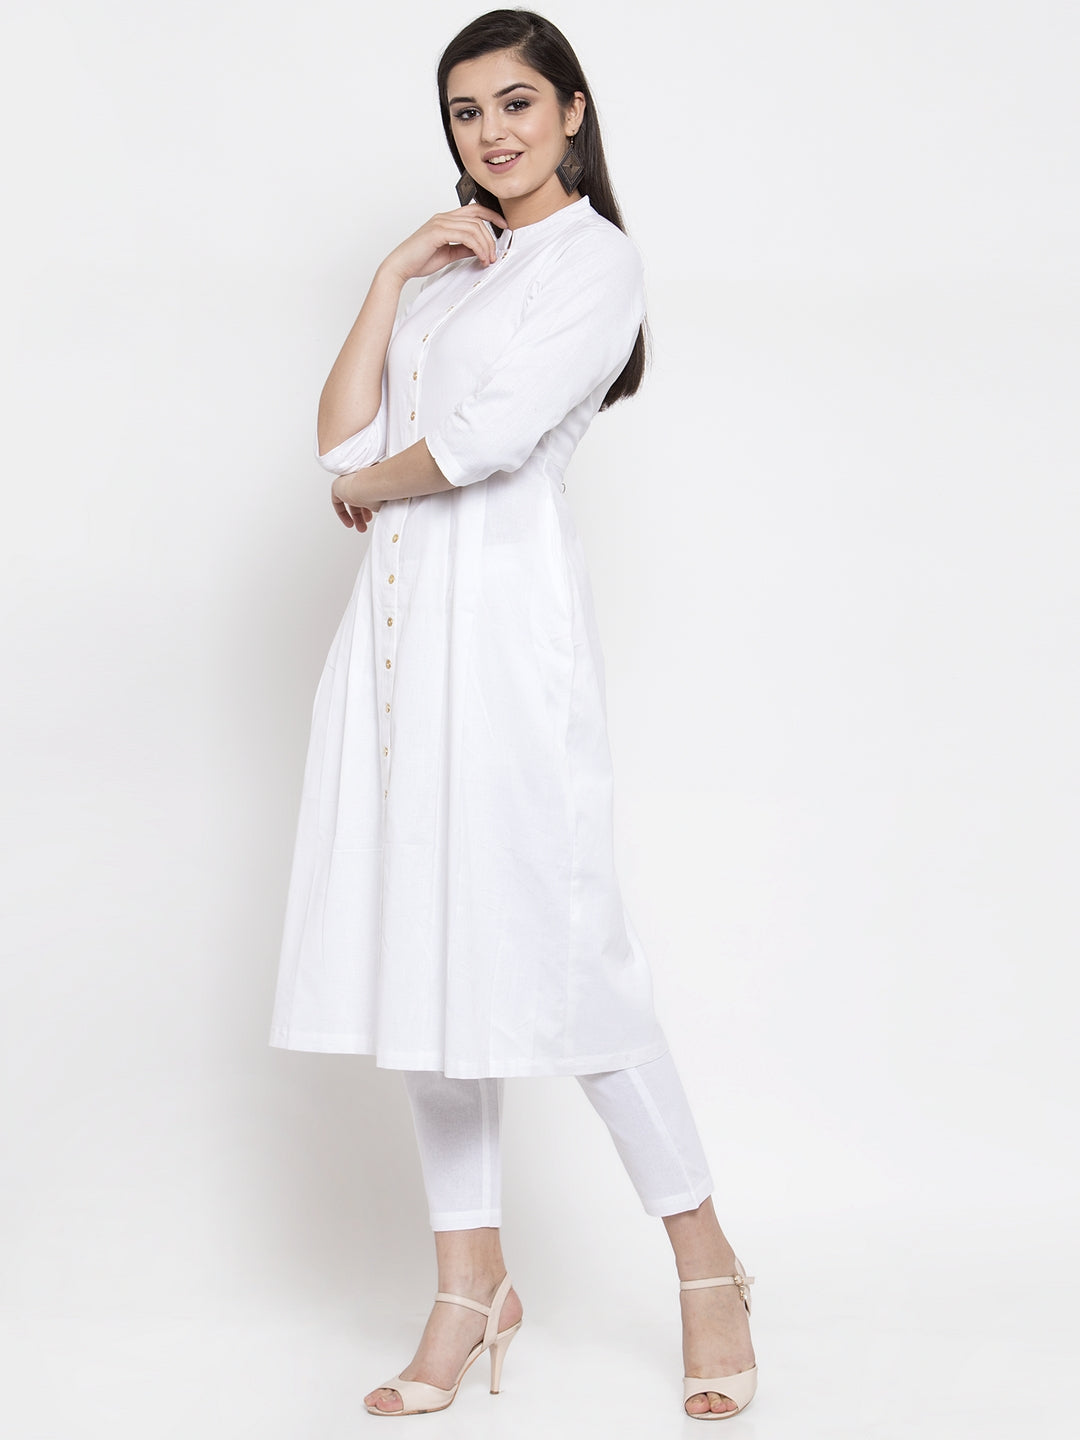 Buy Femeone Women White Cotton Kurti and Pant Set - L Online at